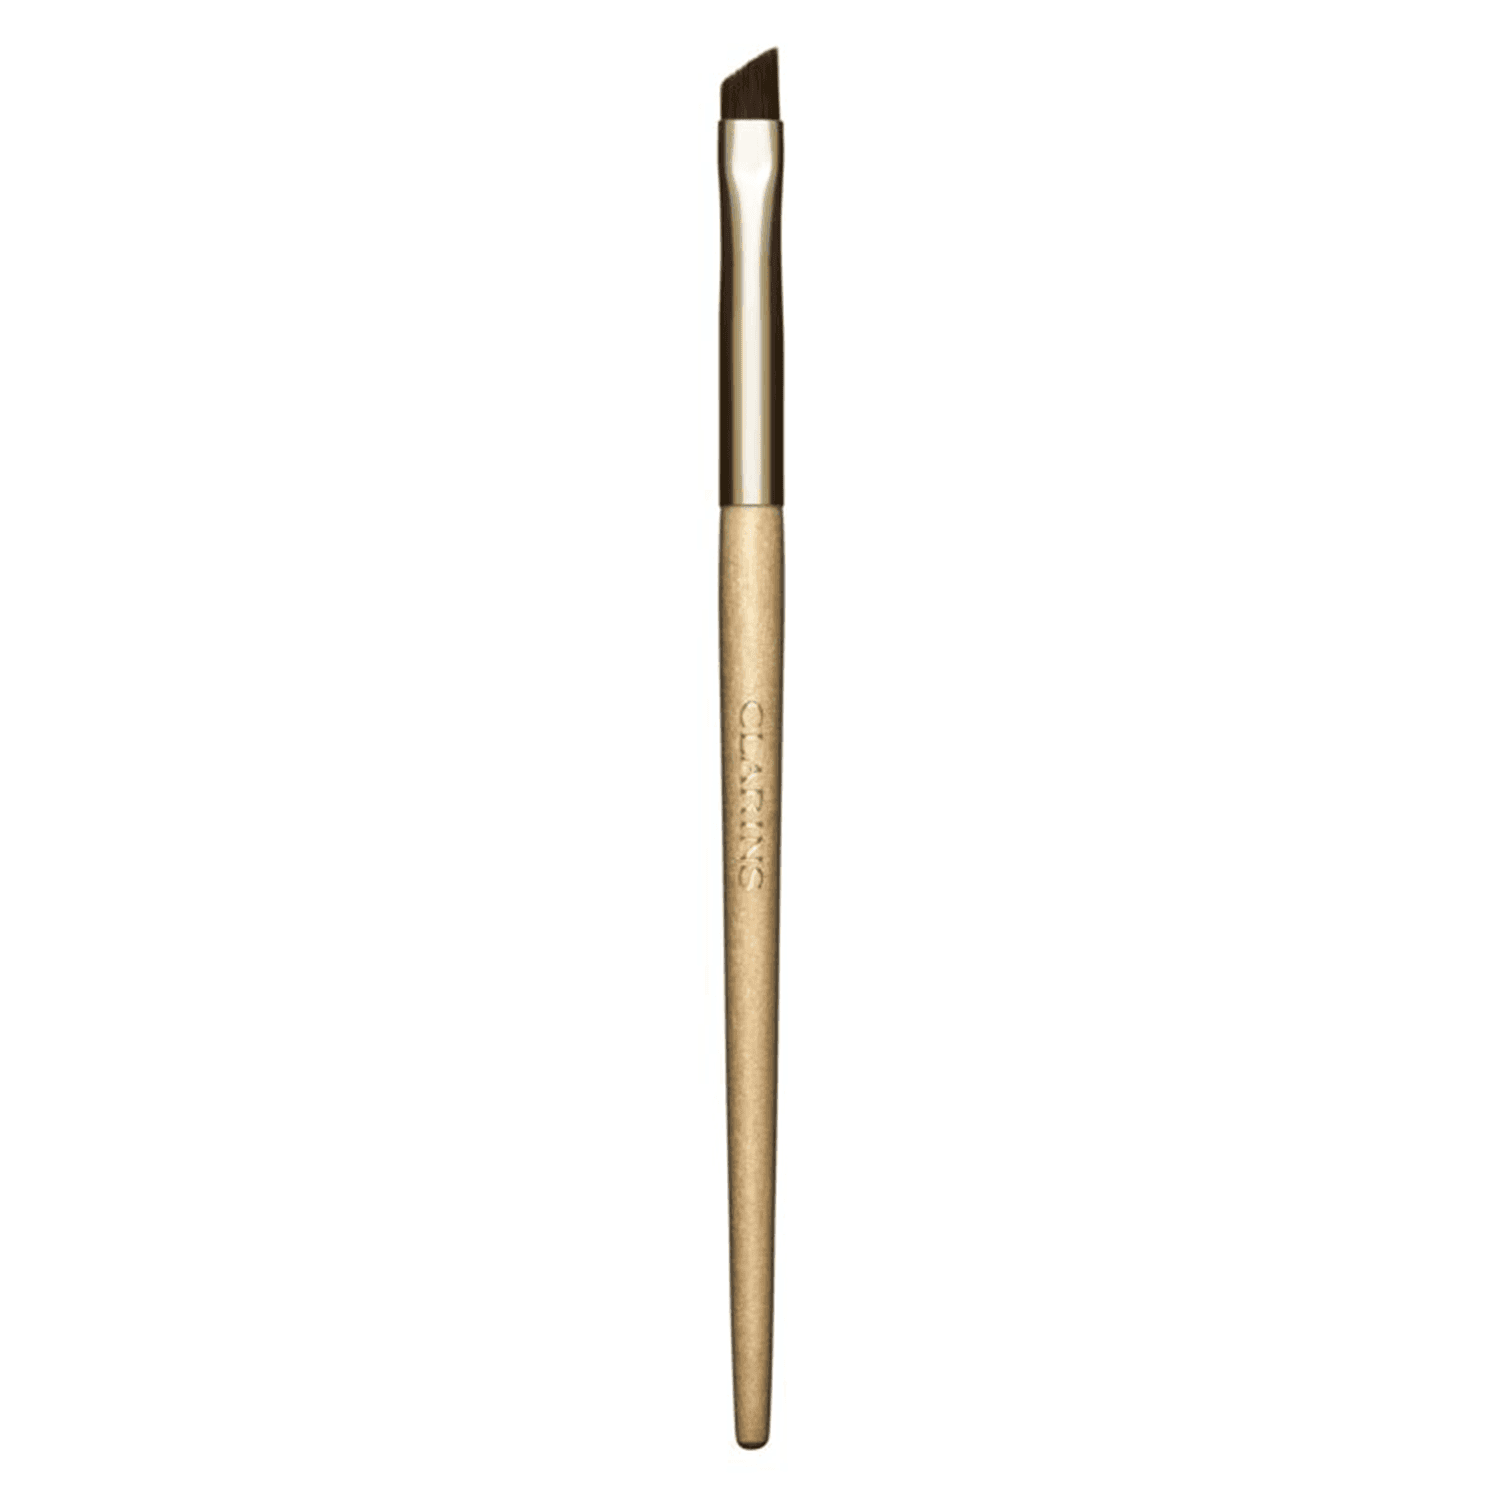 Clarins Tools - Eyeliner Brush